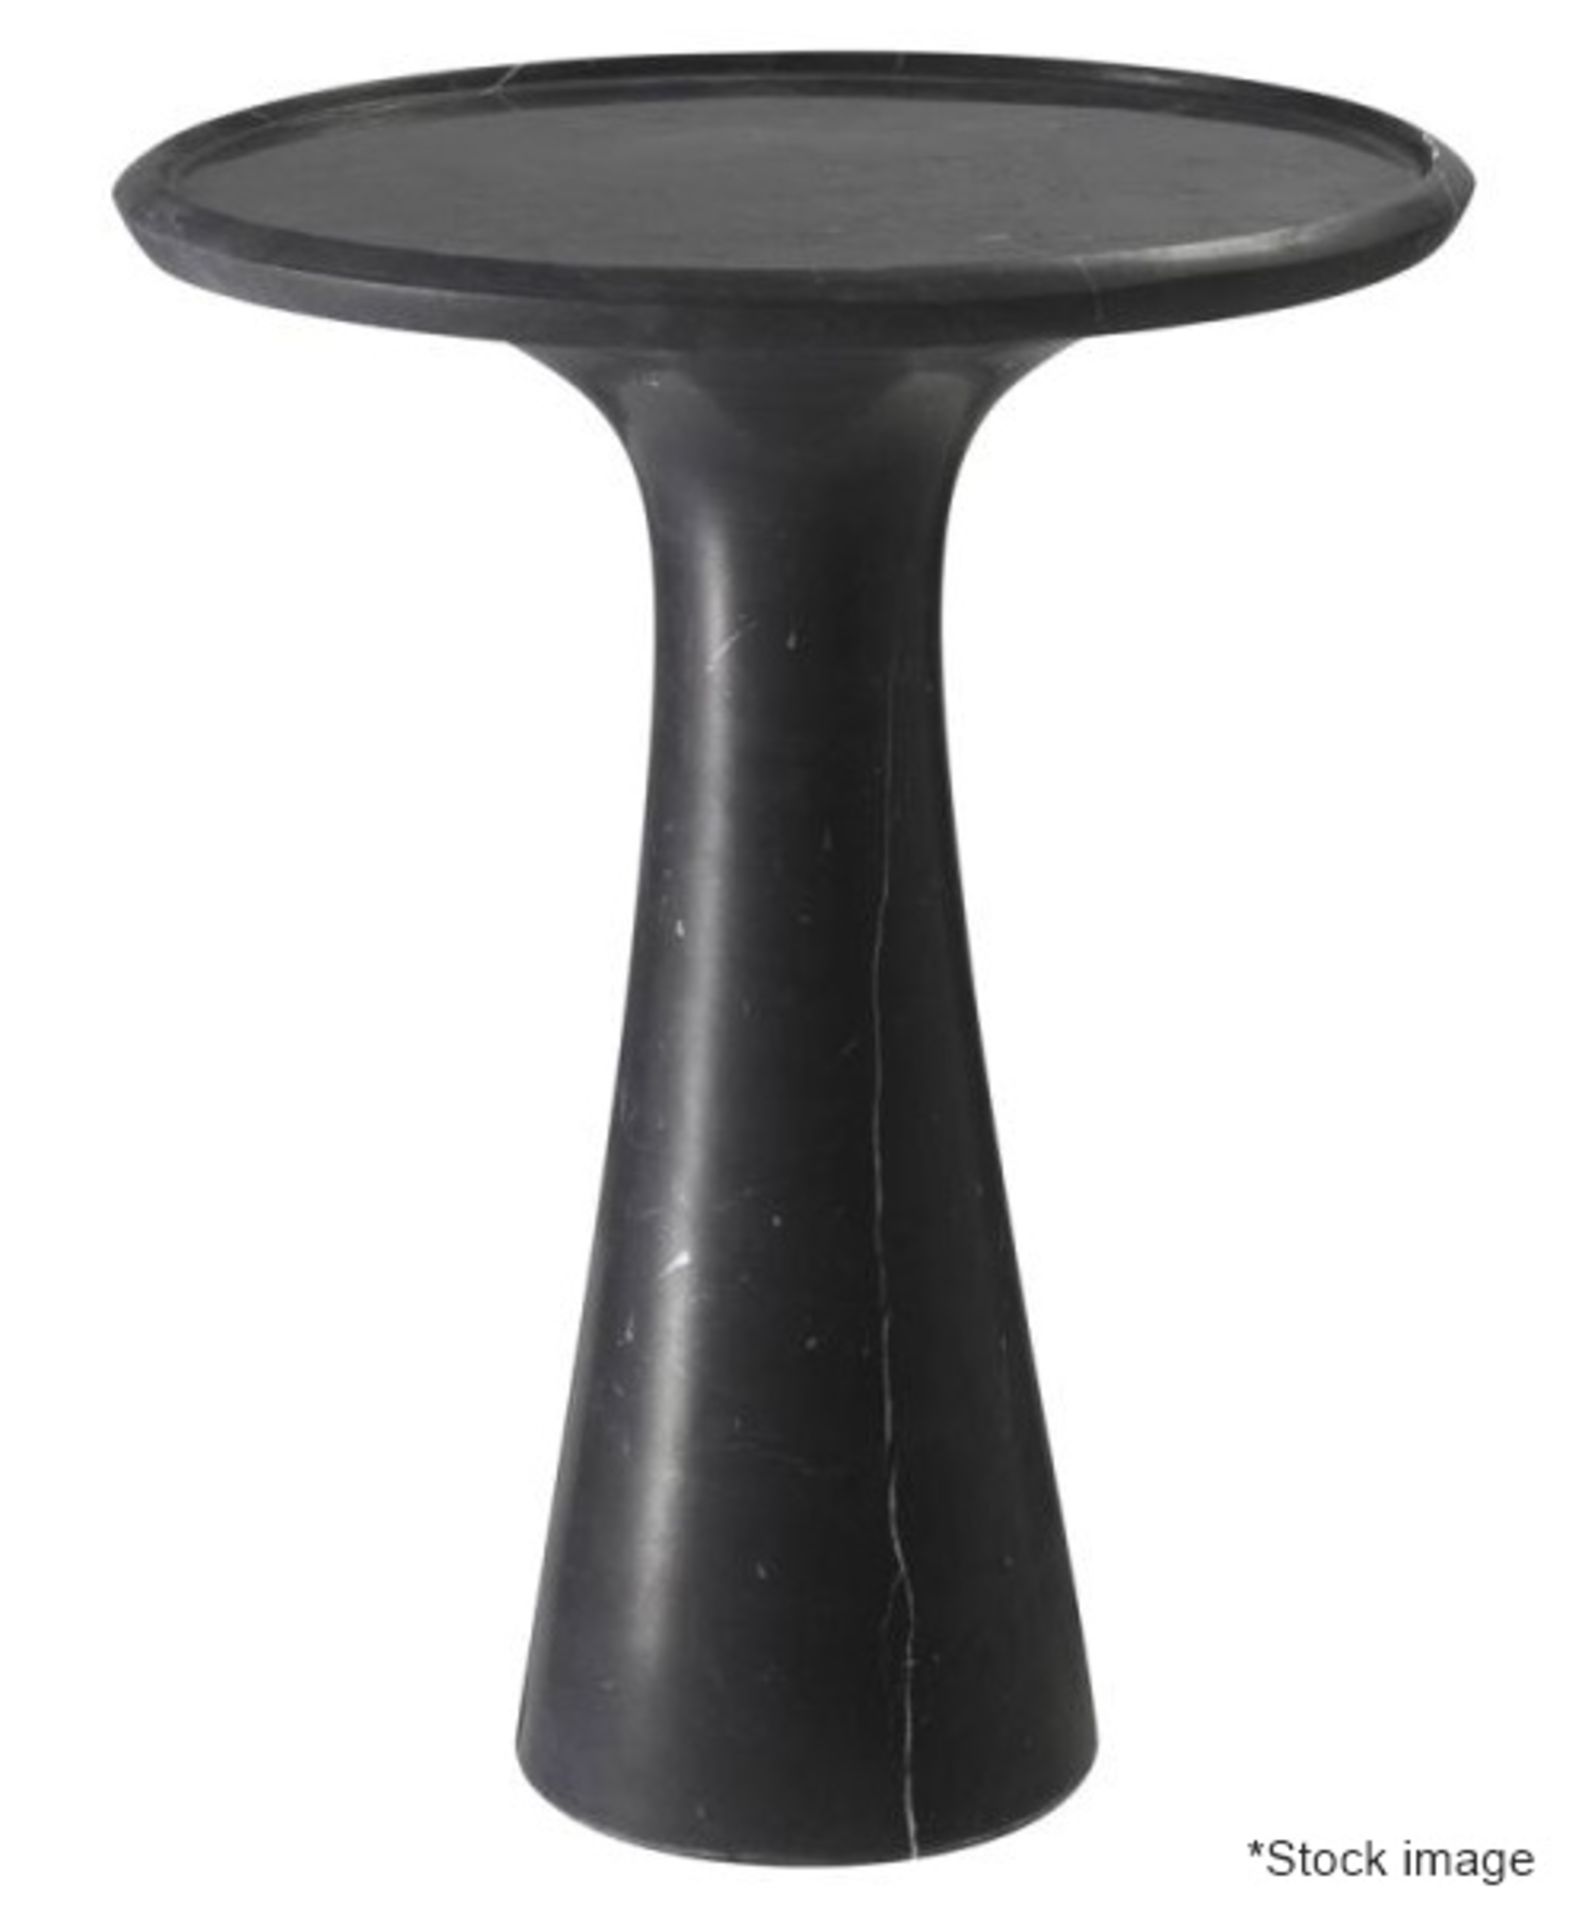 1 x EICHHOLTZ 'Pompano' Luxury Black Marble Low Side Table - Original RRP £2,405 - Image 2 of 6